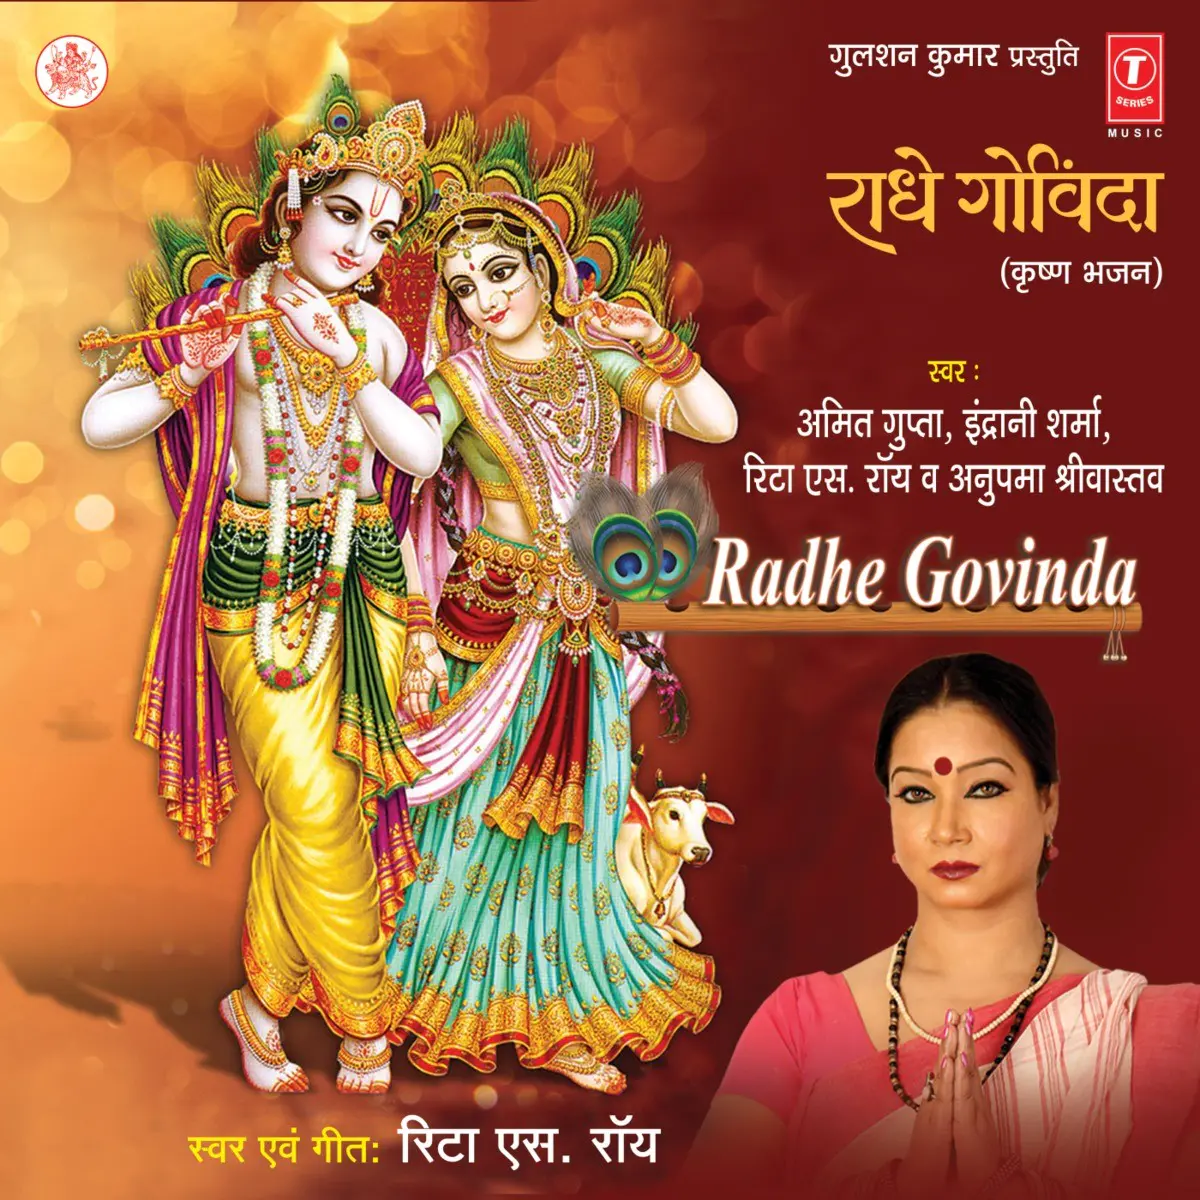 Radhe Govinda Songs Download Radhe Govinda Mp3 Songs Online Free On Gaana Com Ever forget your own mobile phone number? radhe govinda mp3 songs online free on